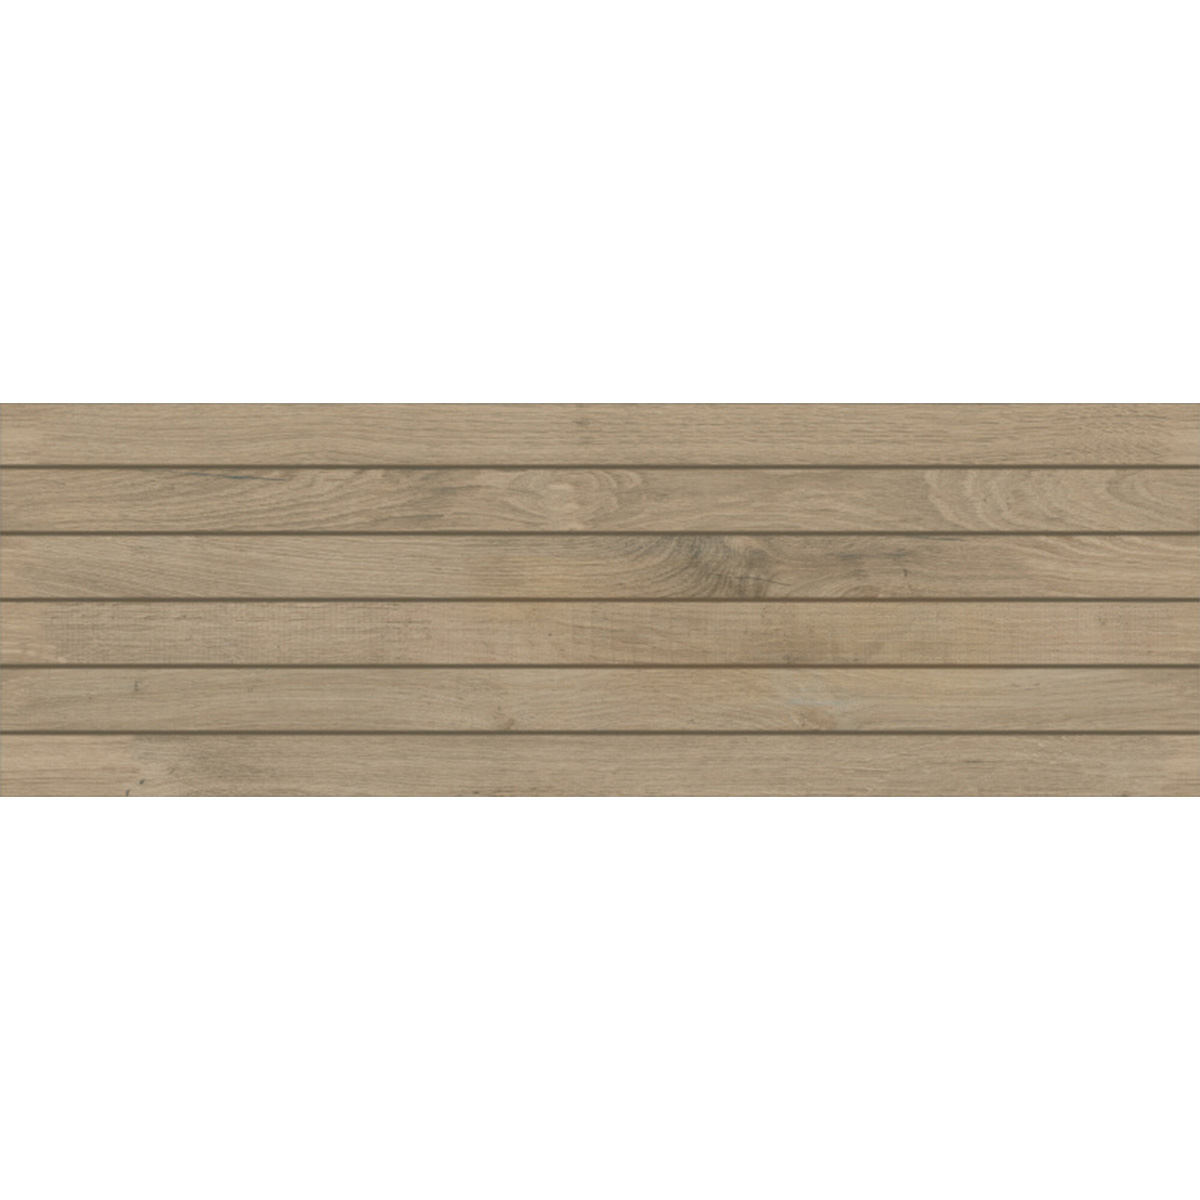 Strip Northwood Oak Decor 33.3 x 100cm Rectified Tile - 1.33sqm perbox